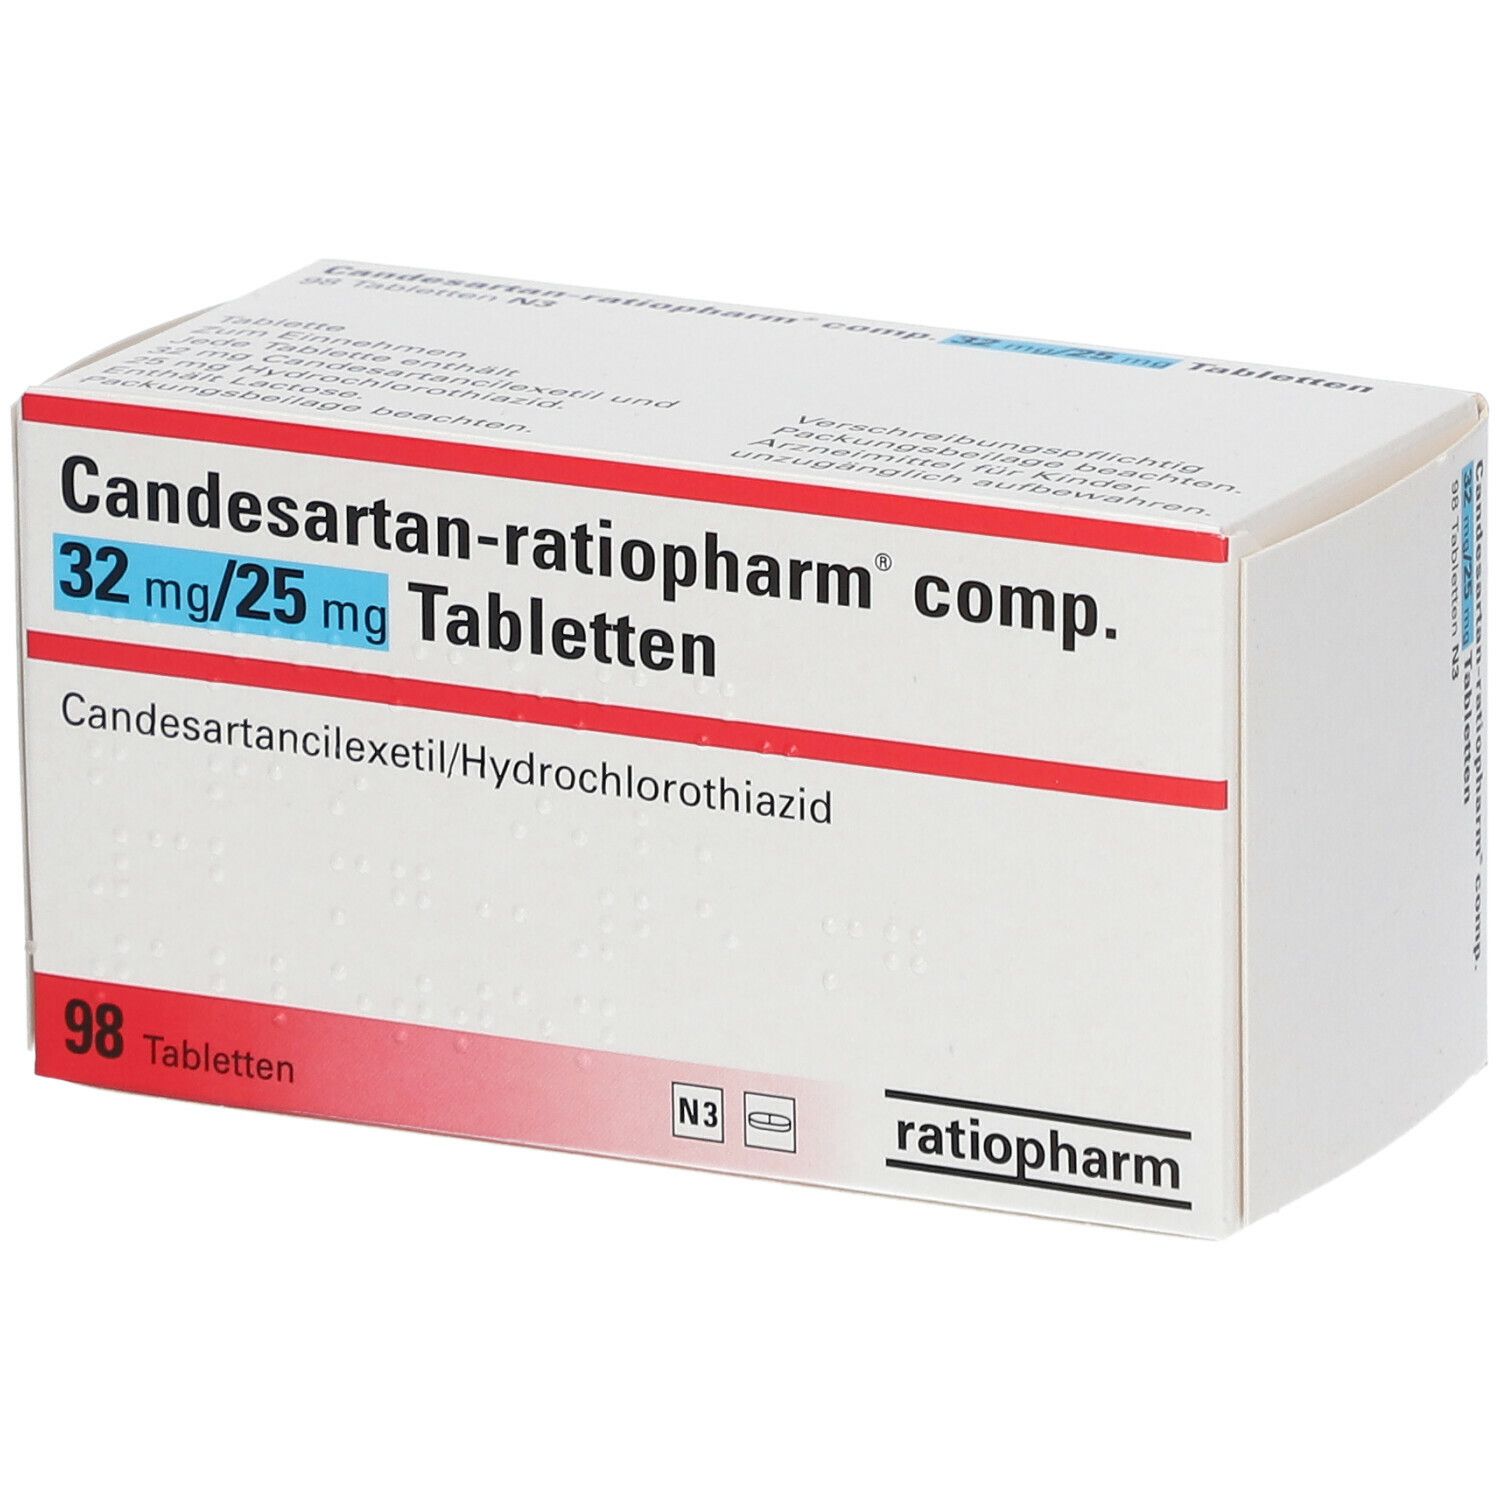 Candesartan-ratiopharm® comp. 32 mg/25 mg